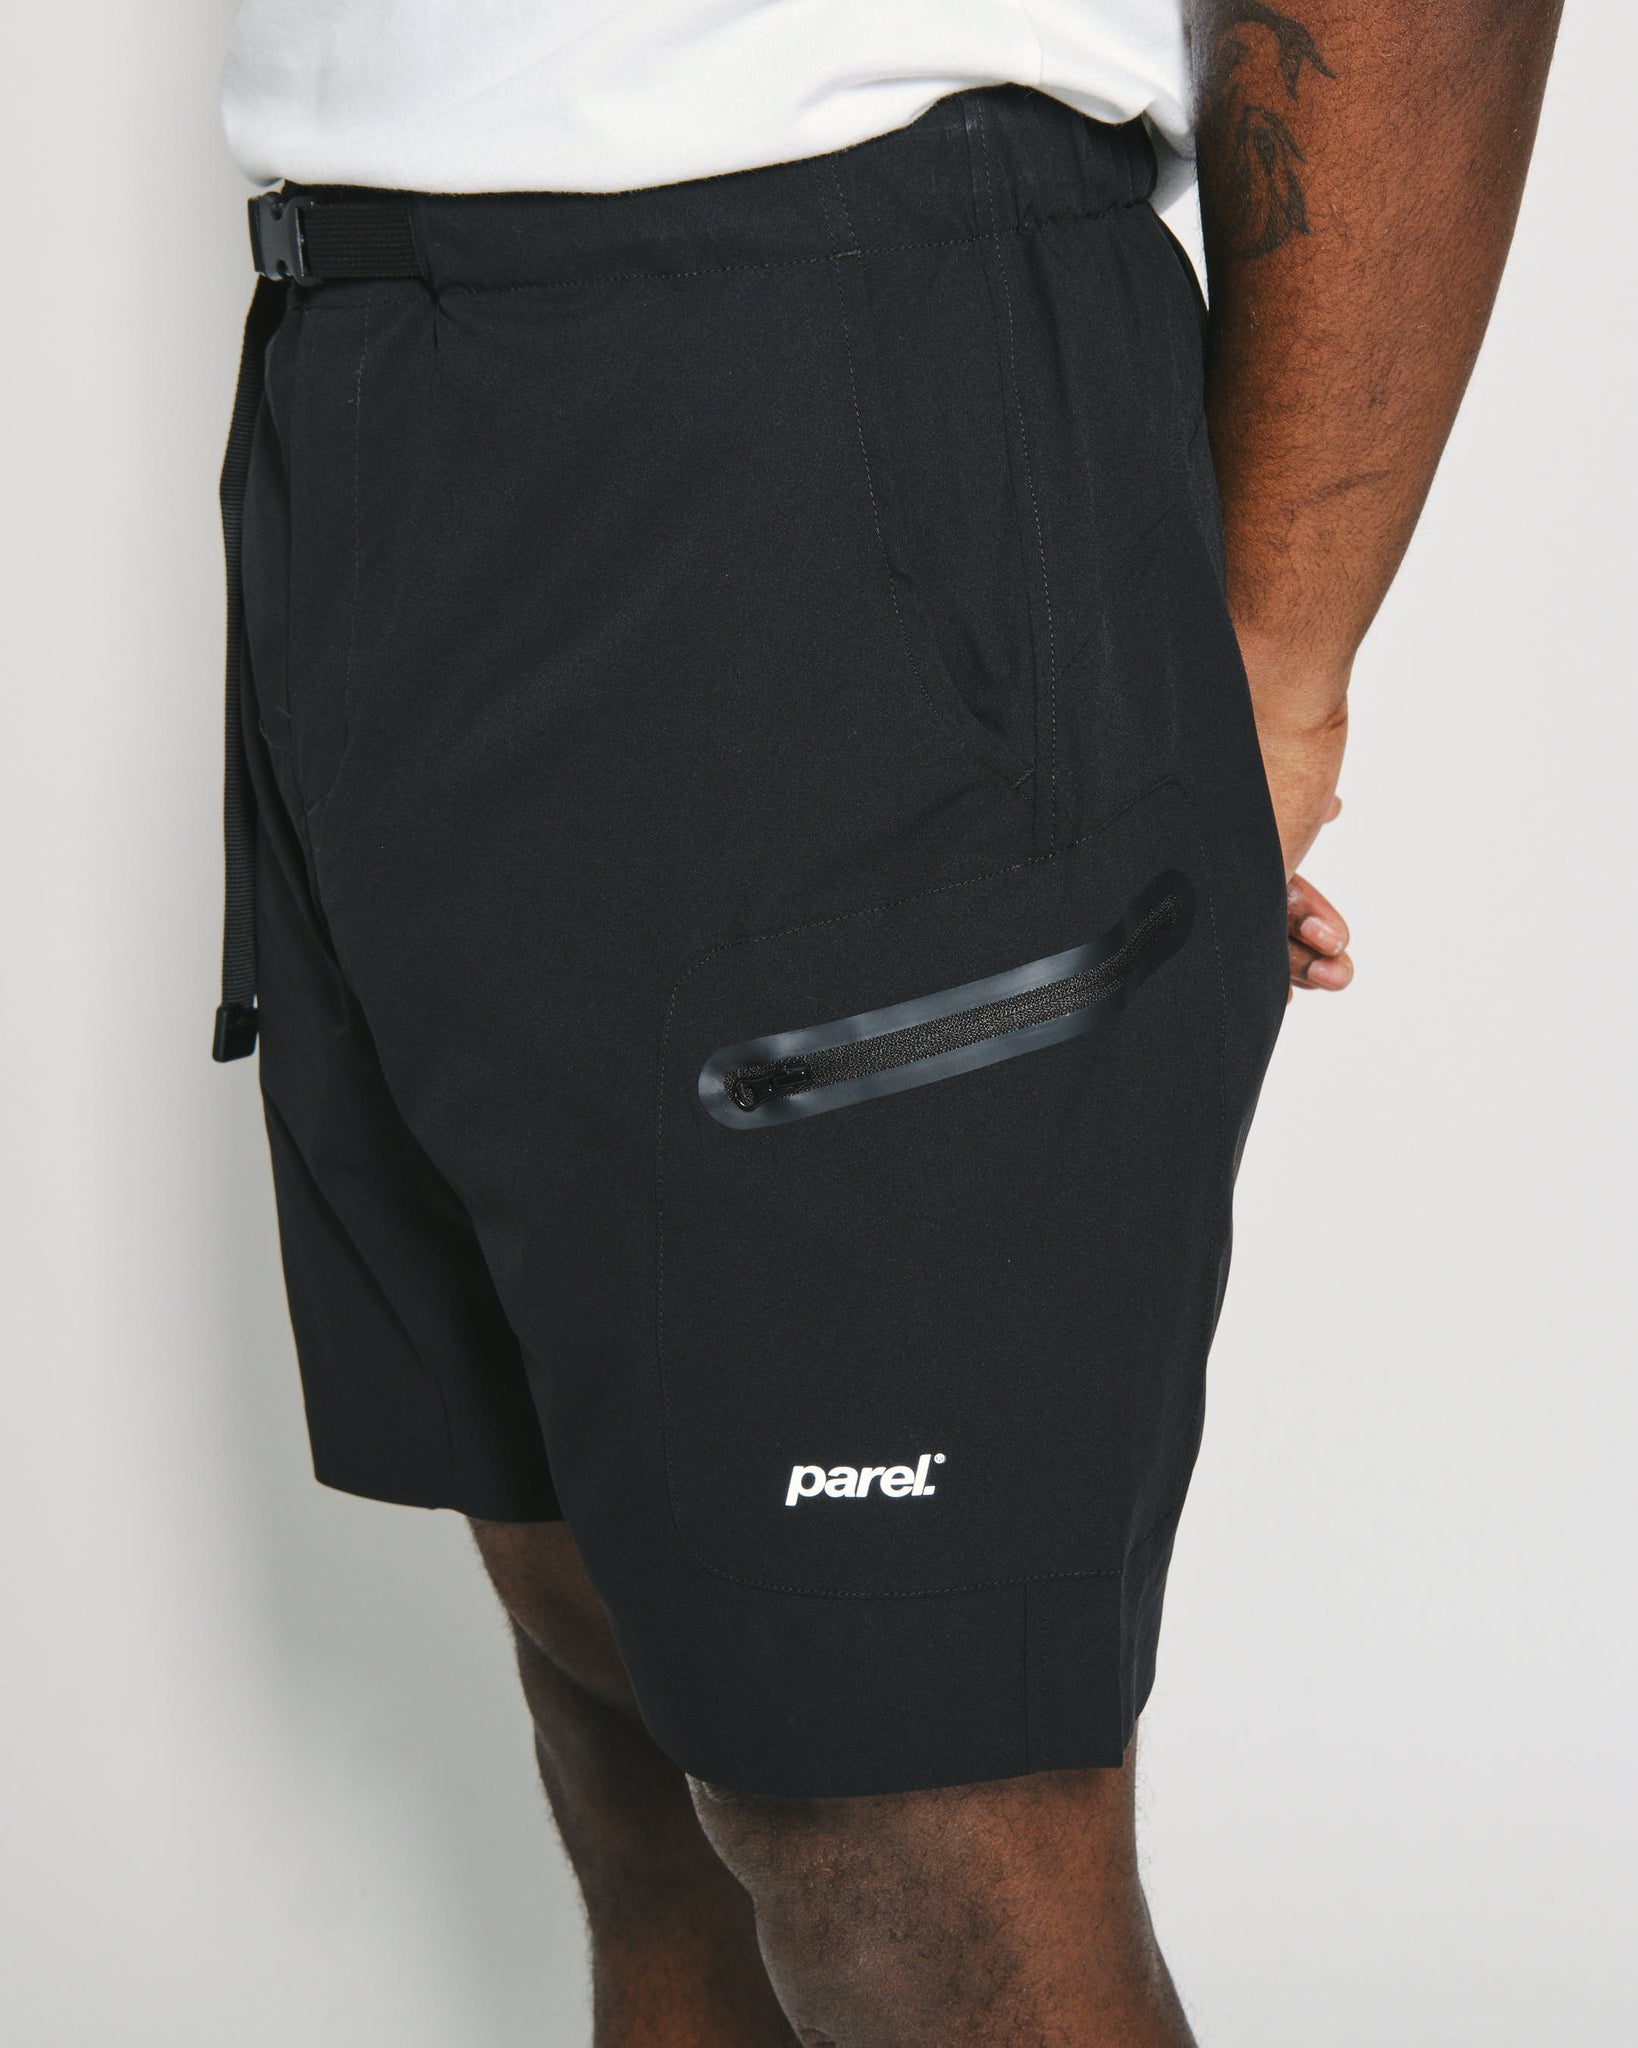 Pico Shorts - Black